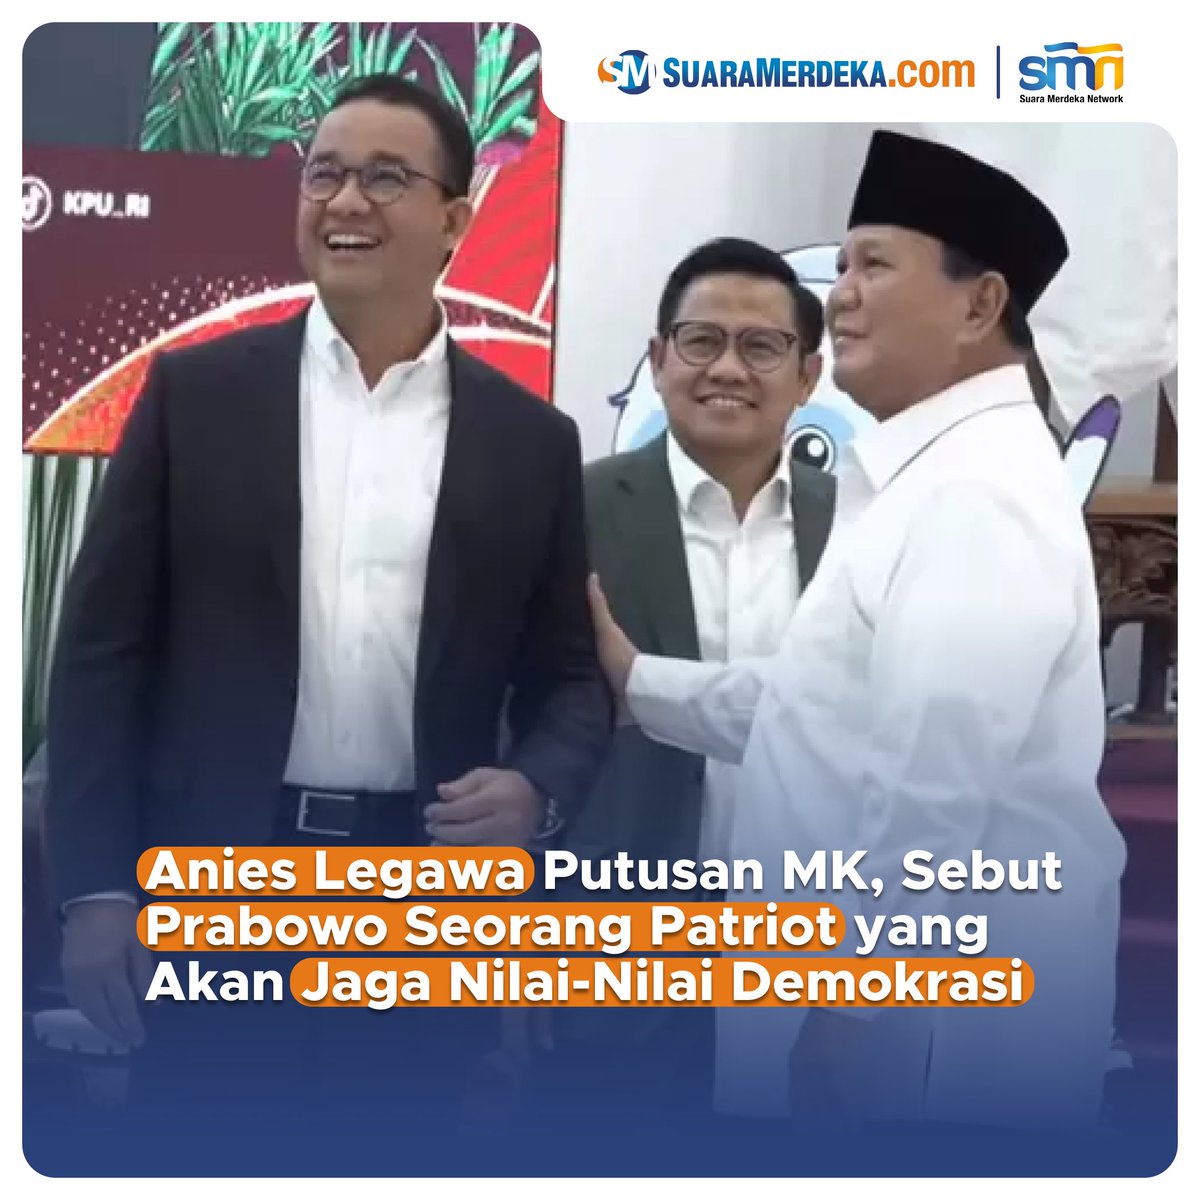 Anies legawa menerima putusan MK, dan menyebut Prabowo sebagai seorang patriot

suaramerdeka.com/nasional/04125…

#suaramerdeka #suaramerdekacom #promedia #aniesbaswedan #muhaiminiskandar #putusanmk #prabowosubianto #gibranrakabumingraka #kpu #kpuri